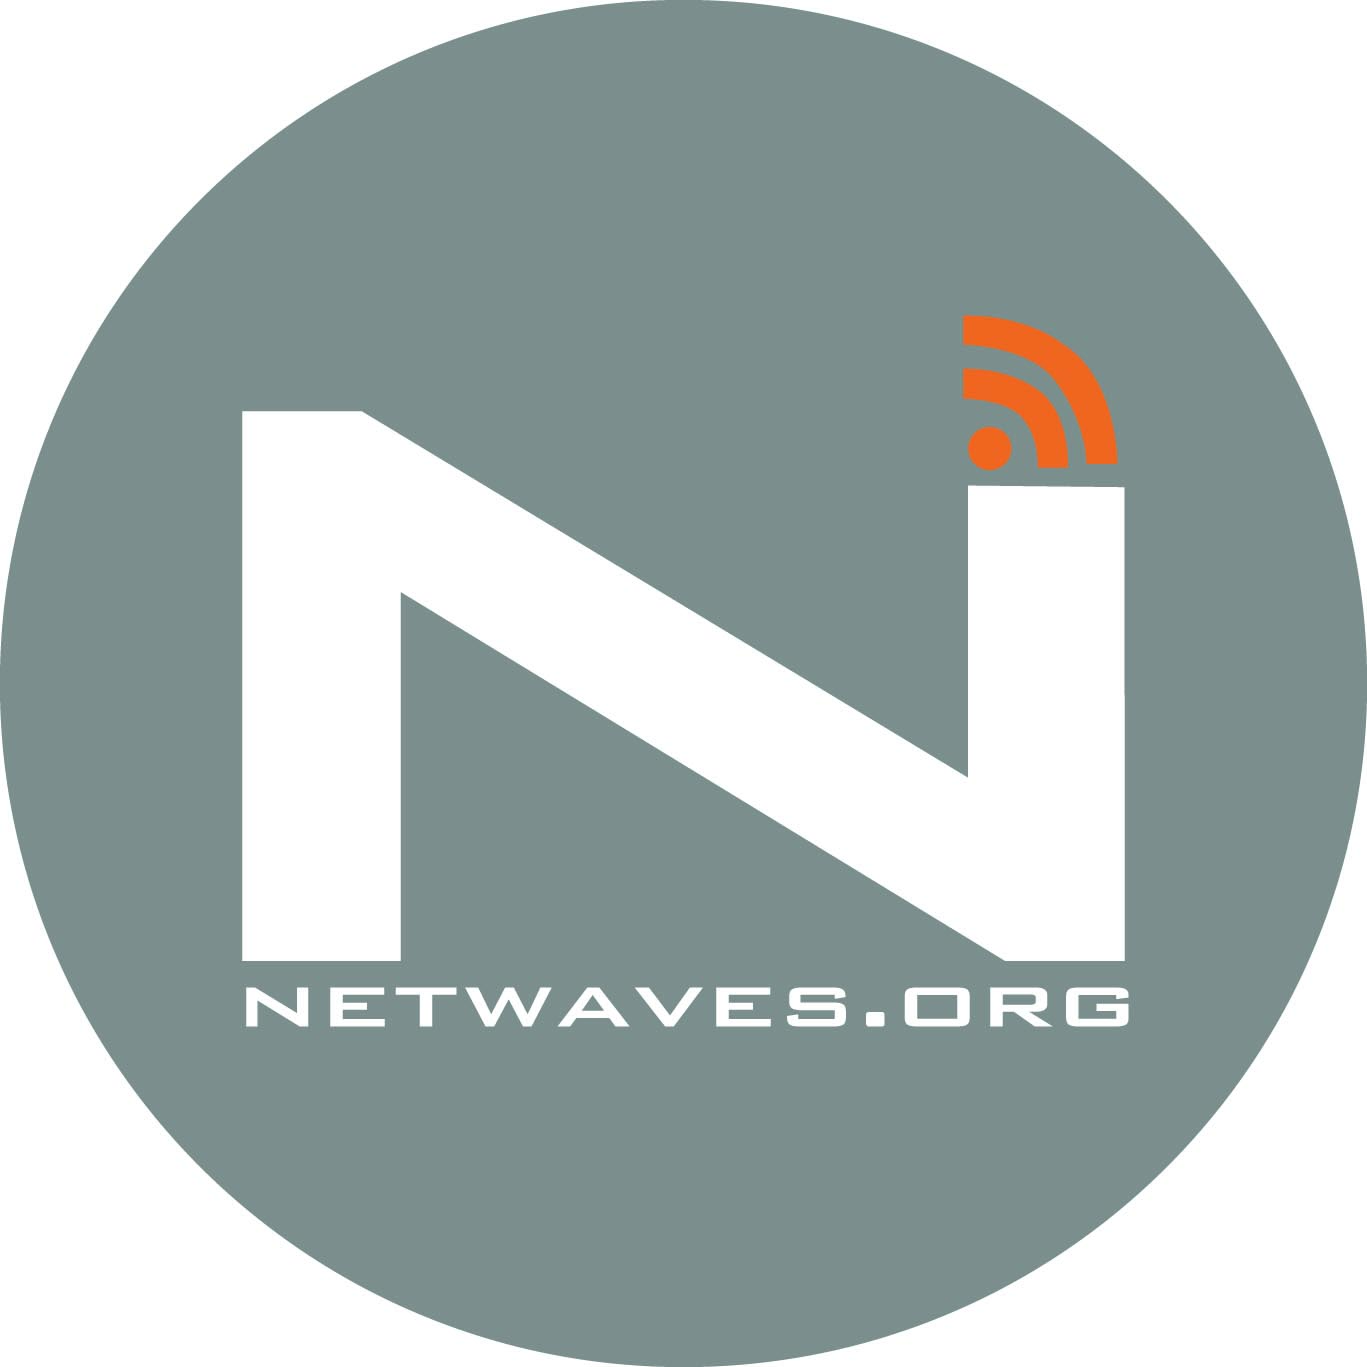 netwaves – clongclongmoo-mix for netwaves